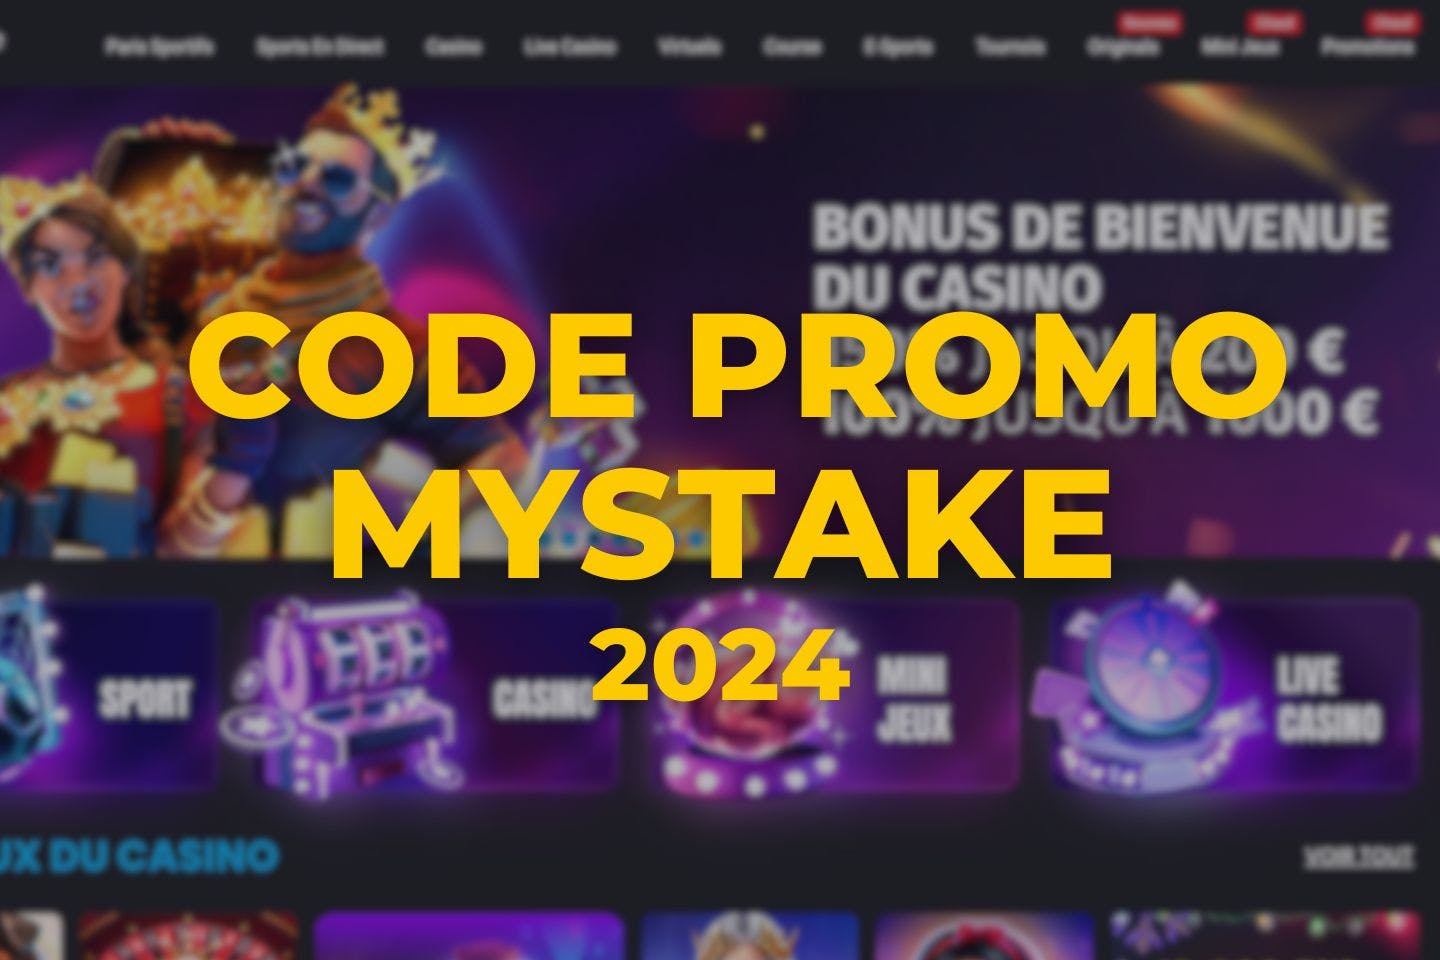 Code promo Mystake 2024